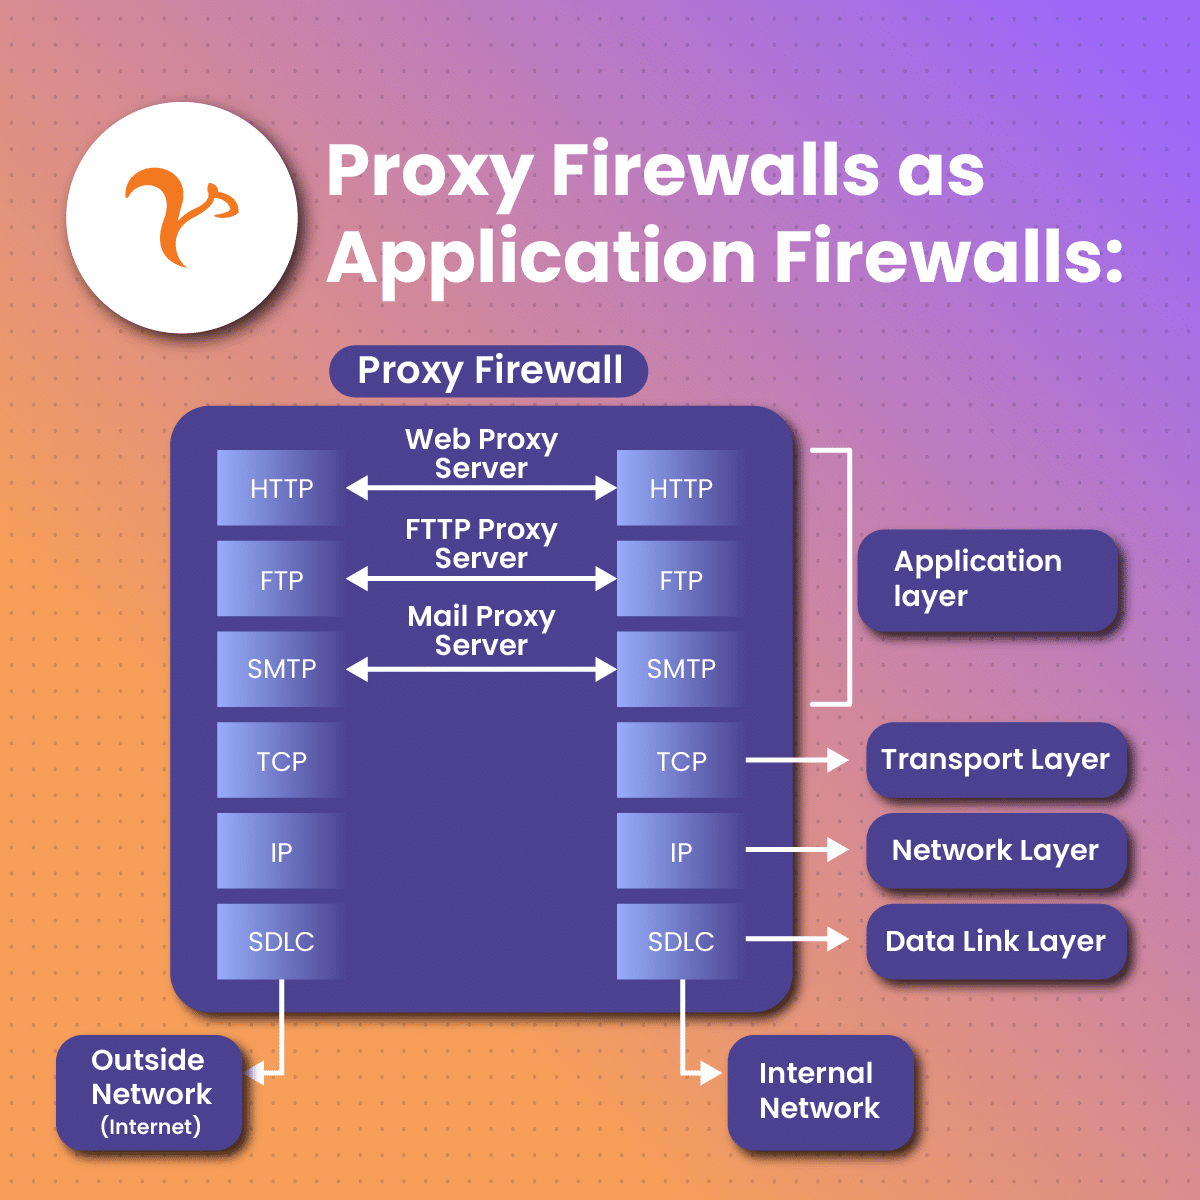 proxy firewalls as application firewalls